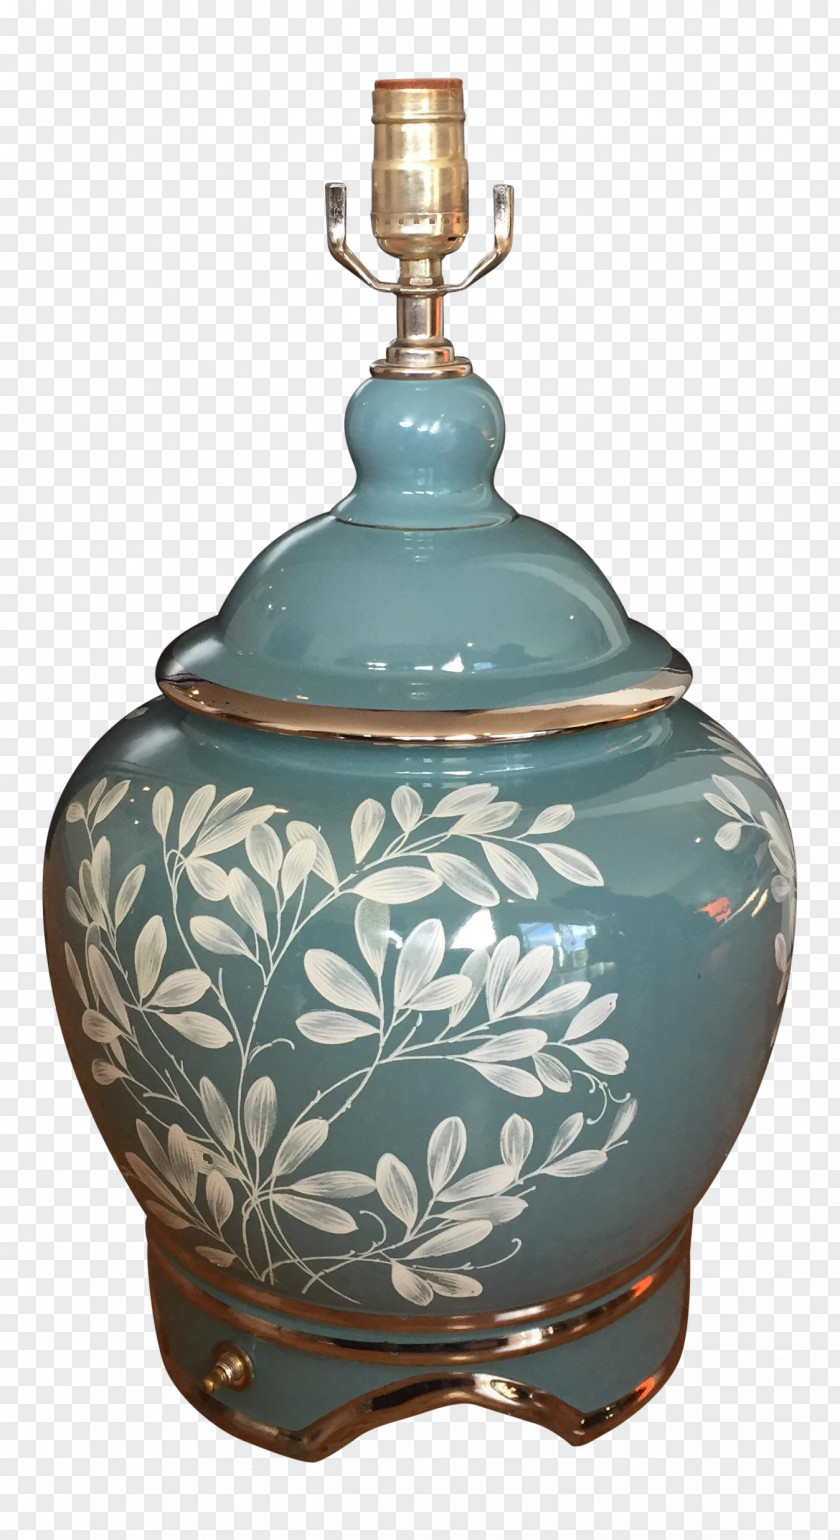 Hand-painted Lamp Ceramic Vase Urn Tableware Pottery PNG